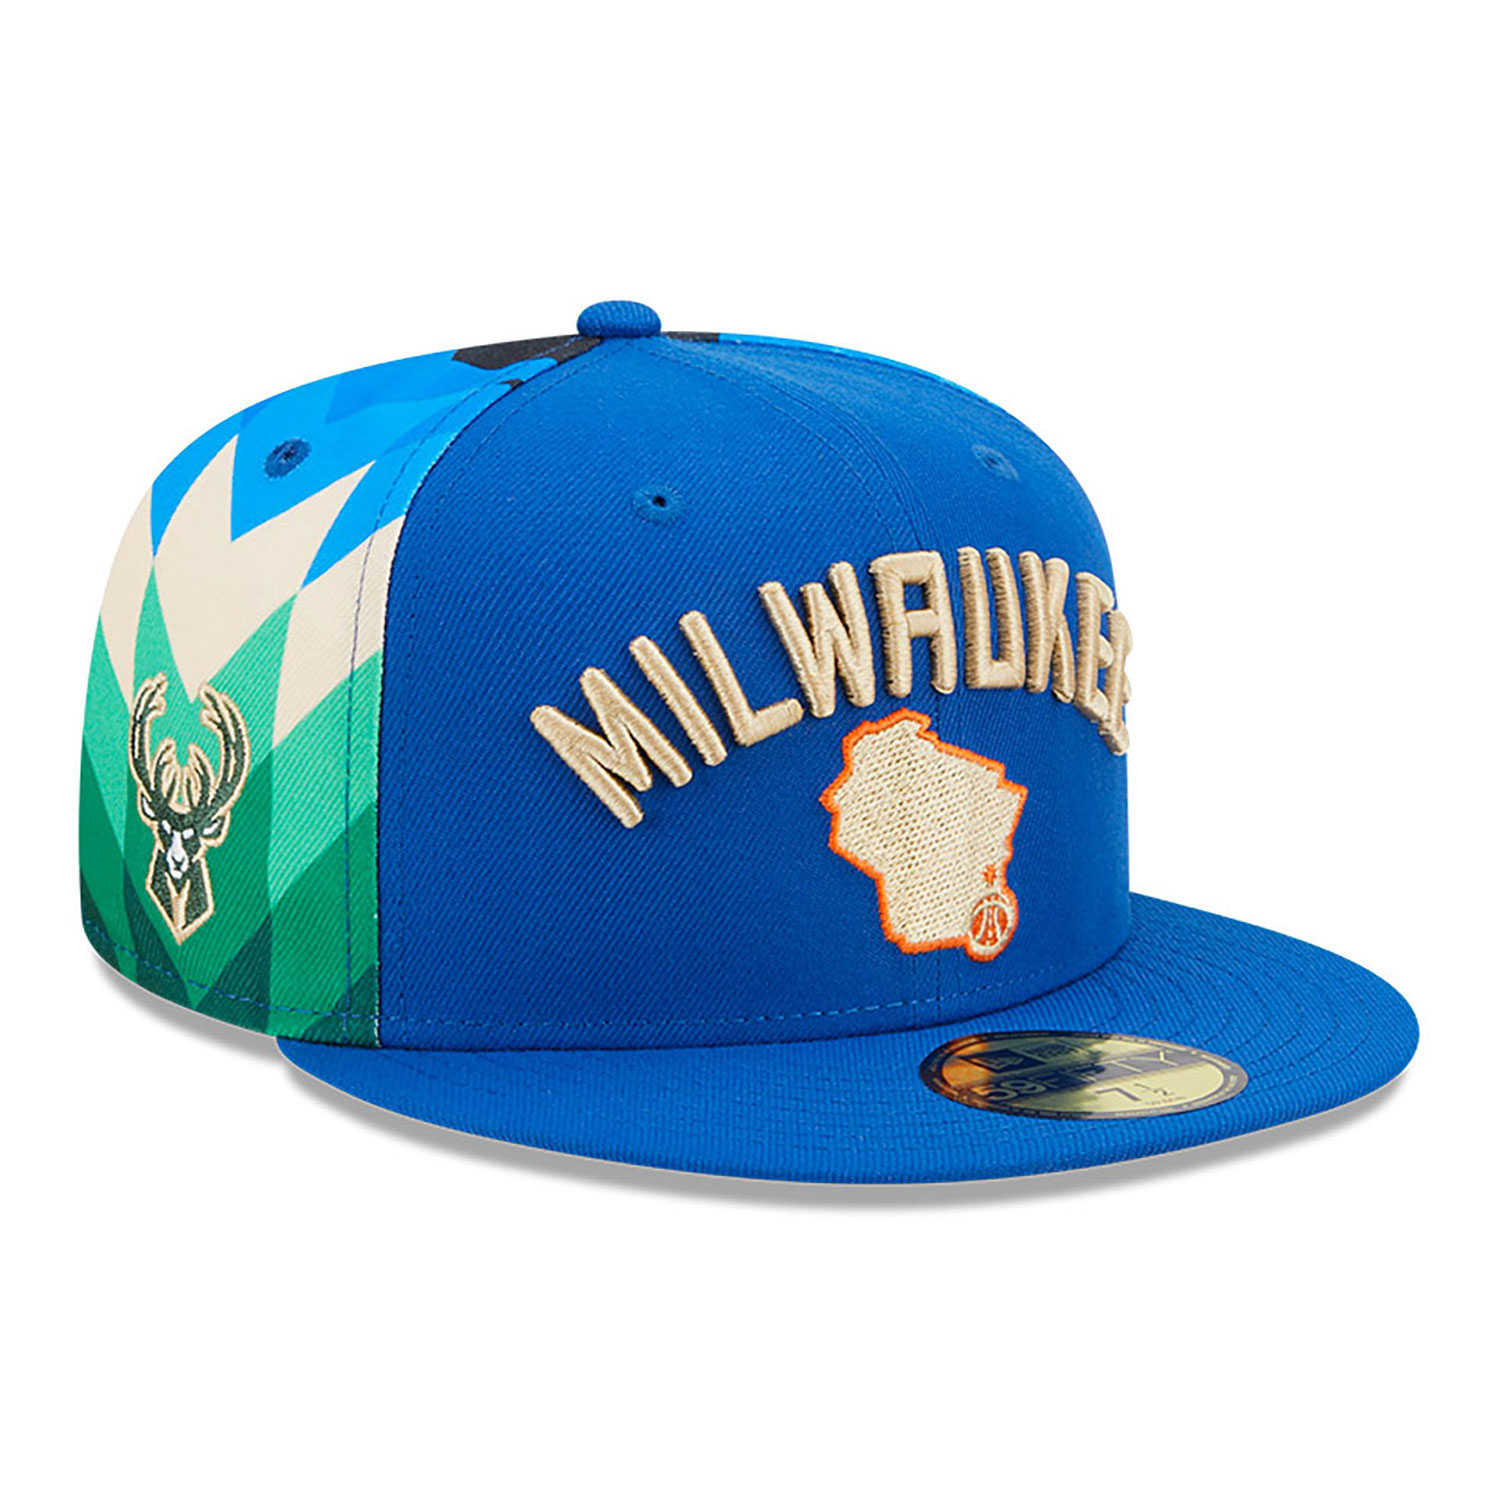 City of Milwaukee hat blue